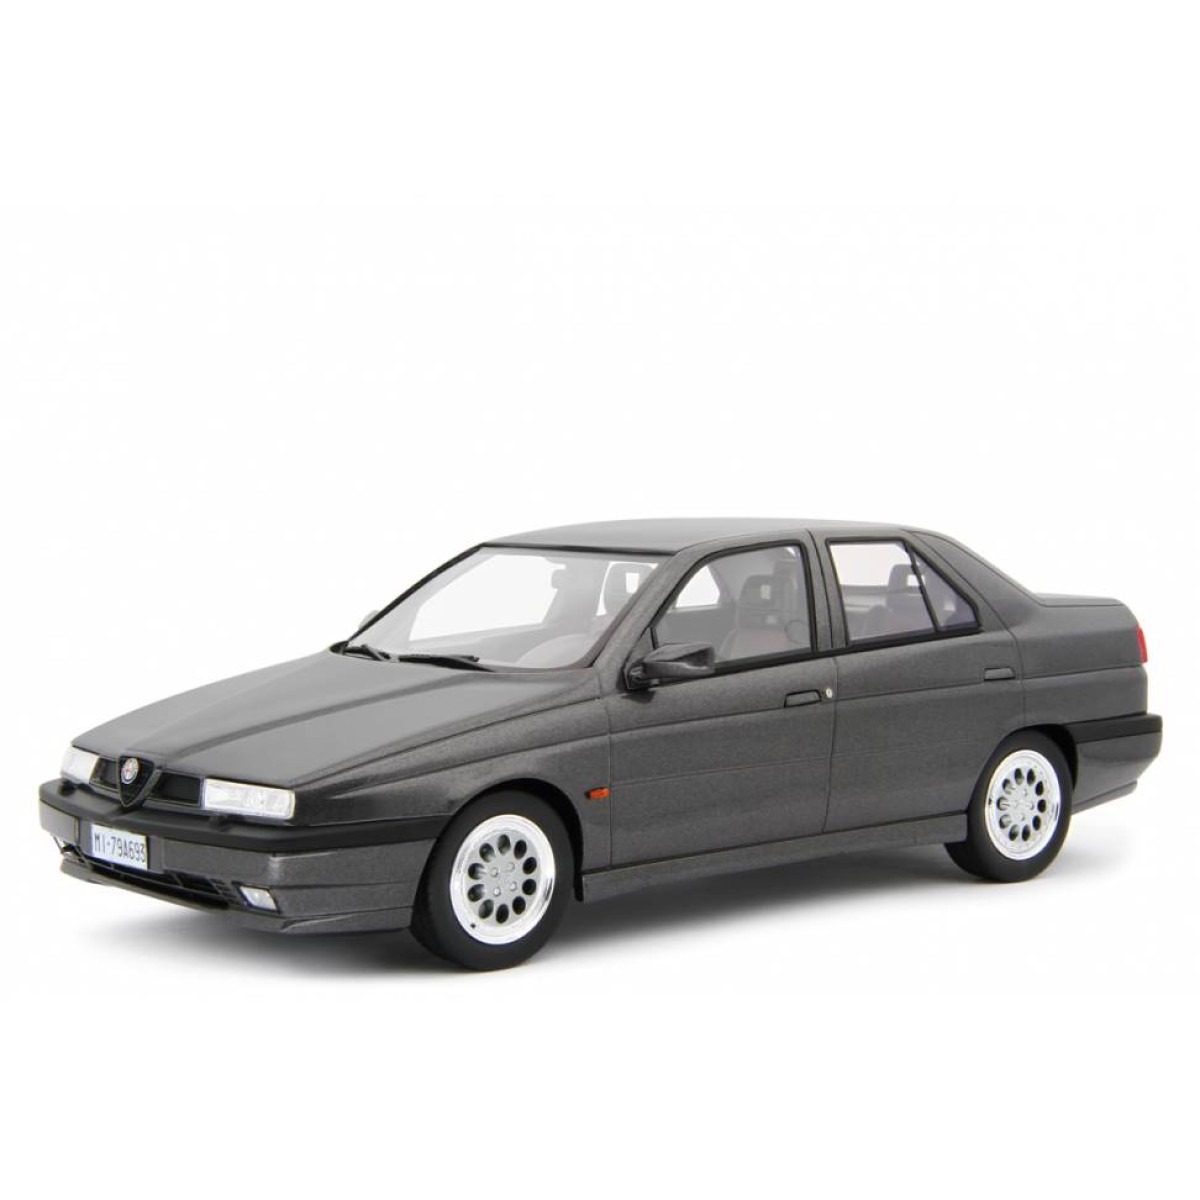 Alfa Romeo | 155 2.0i Turbo 16v Q4 | 1992 | Laudoracing | 1:18 Bram-modelcars | Groot assortiment modelauto's